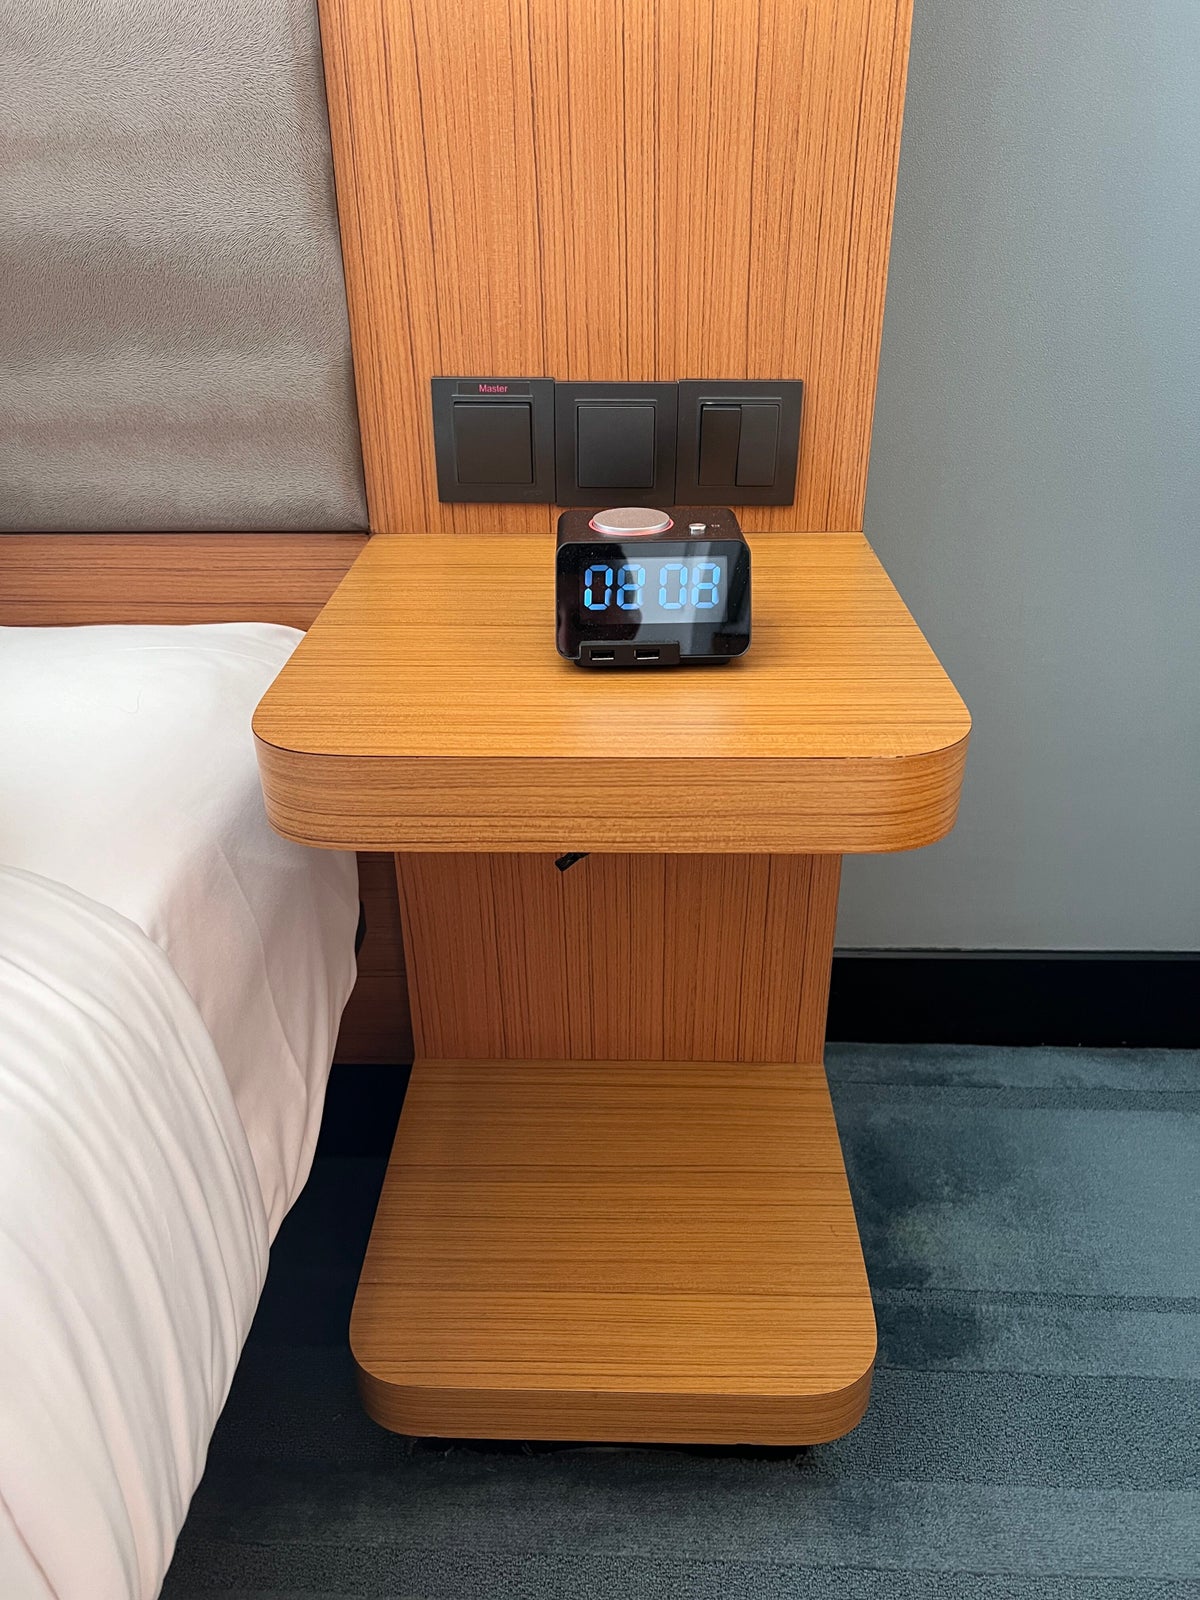 Aloft Kuala Lumpur Sentral nightstand with alarm clock